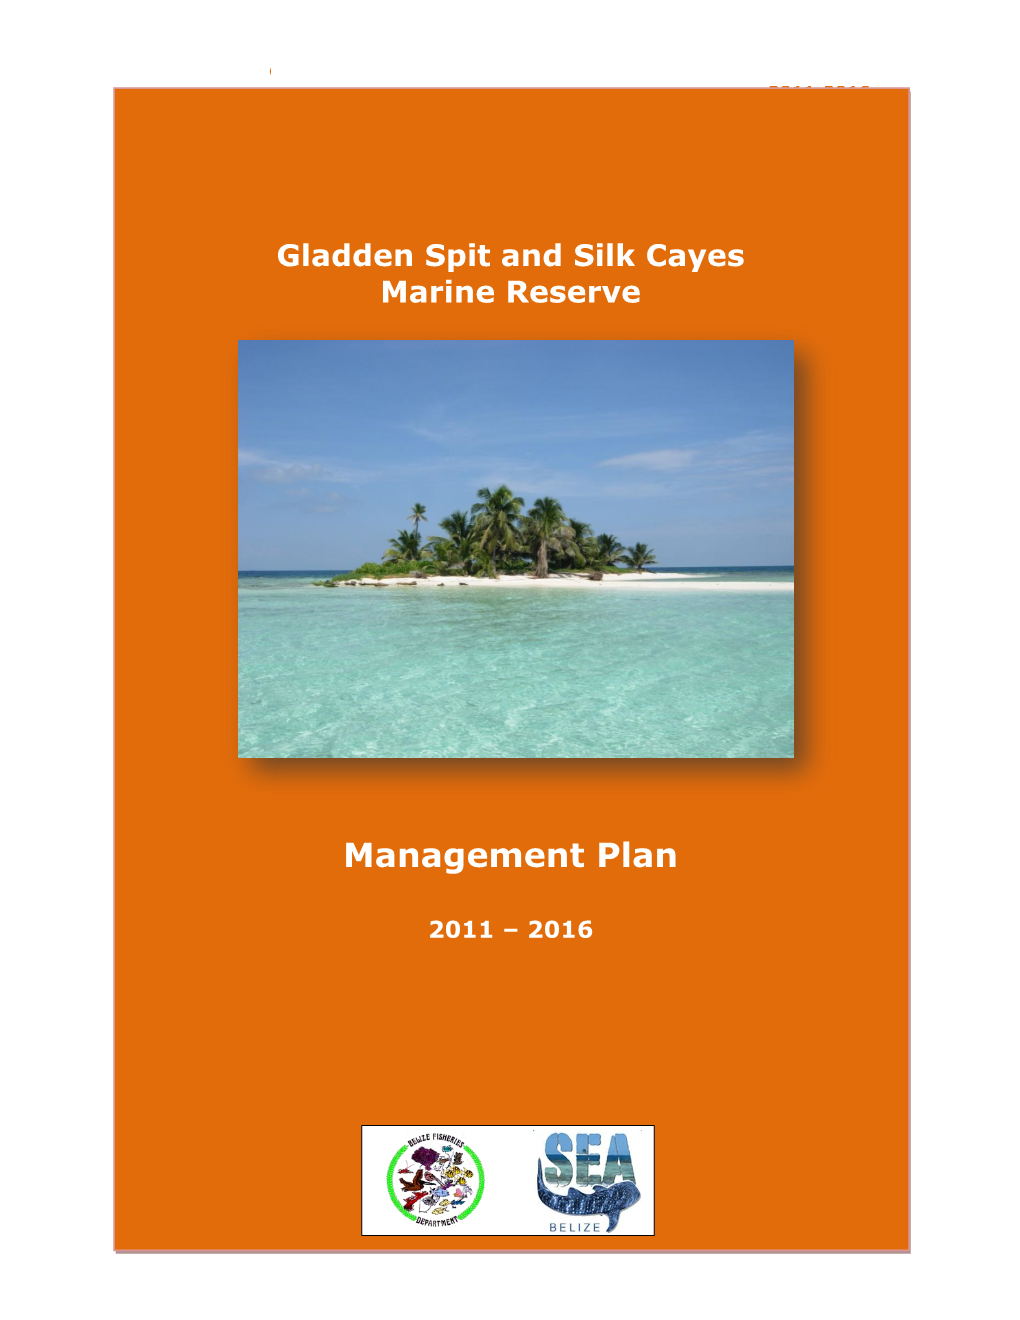 Gladden Spit and Silk Cayes Marine Reserve – Management Plan 2011-2016